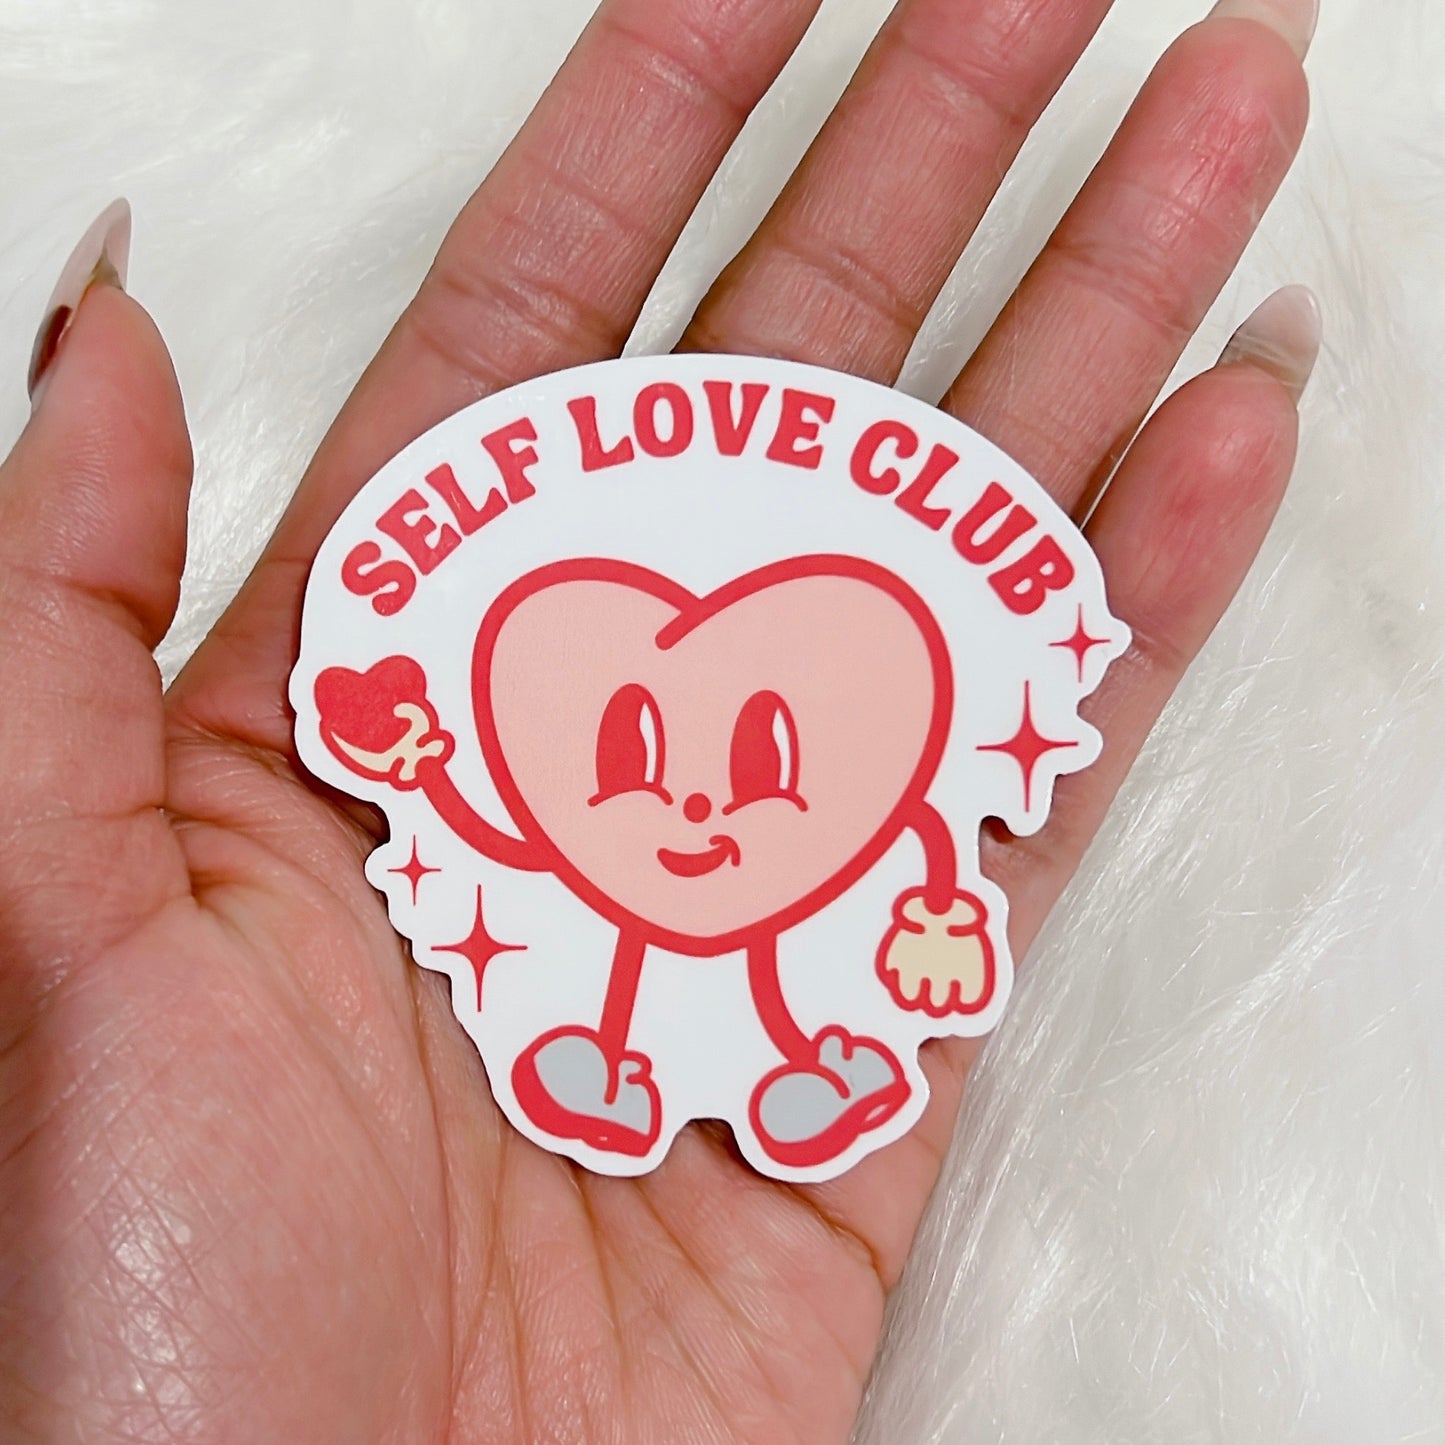 Self Love Club Die Cut Sticker